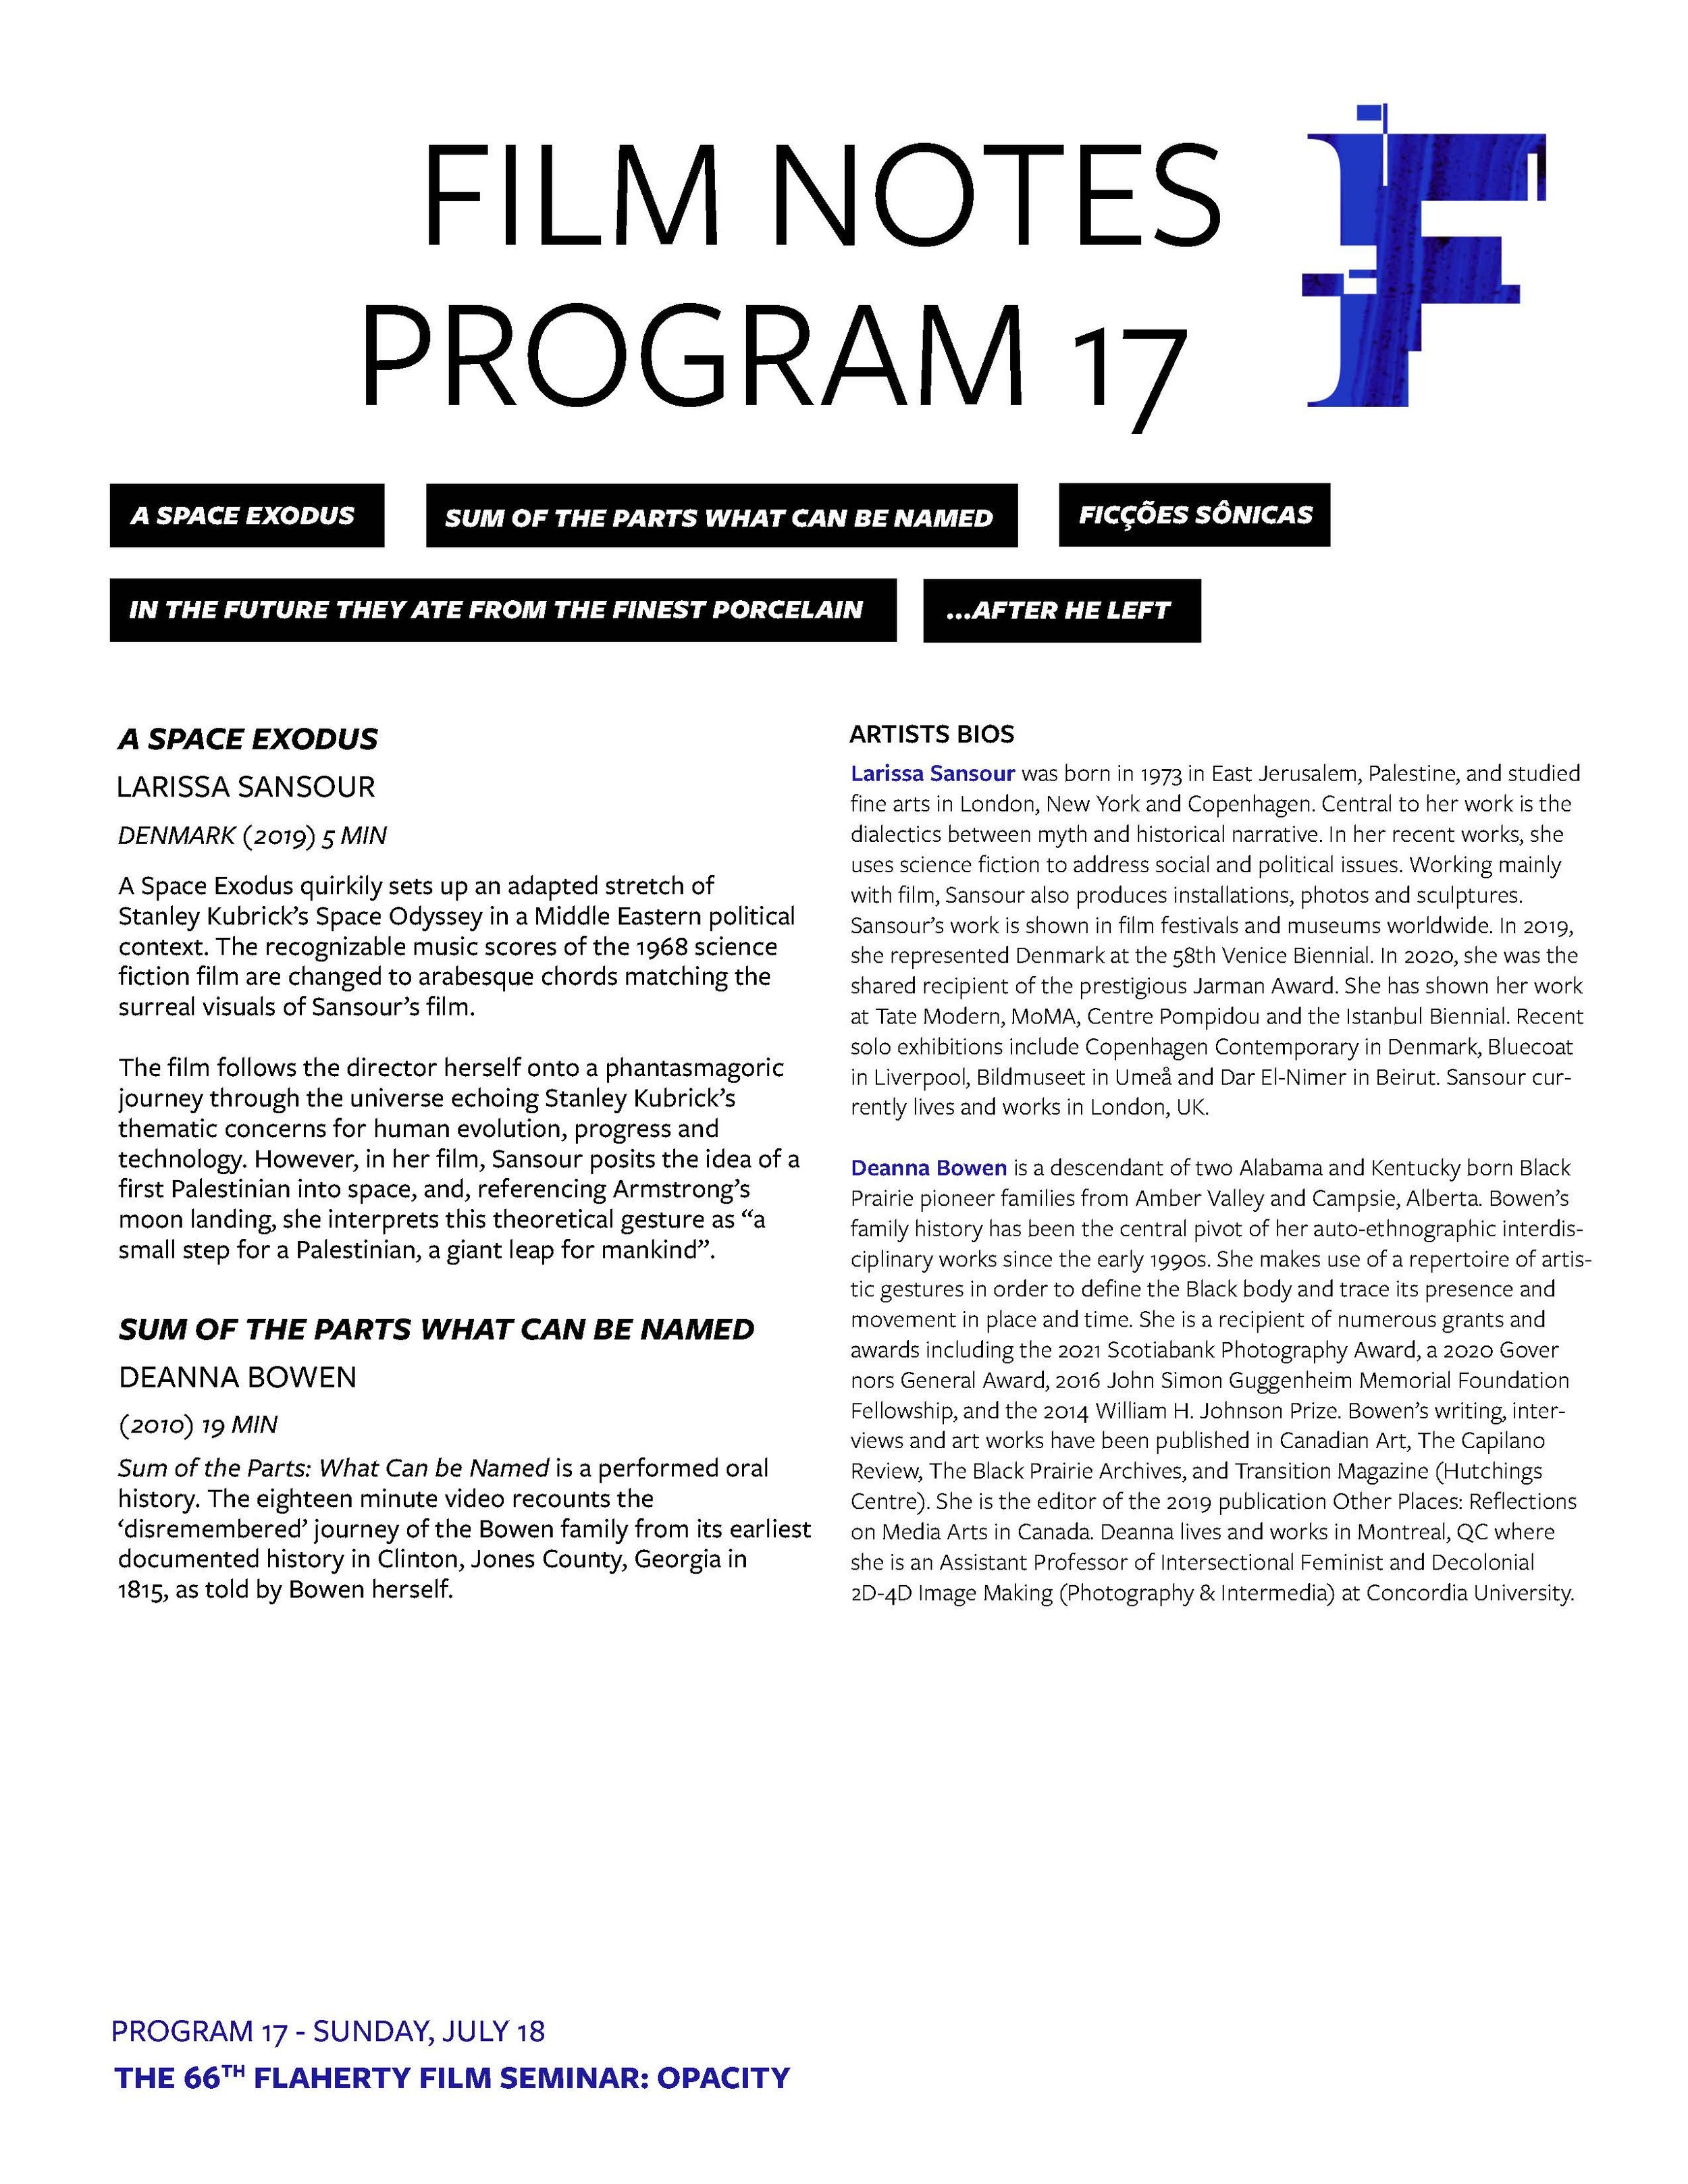 Program 17 Film Notes_Page_1.jpg